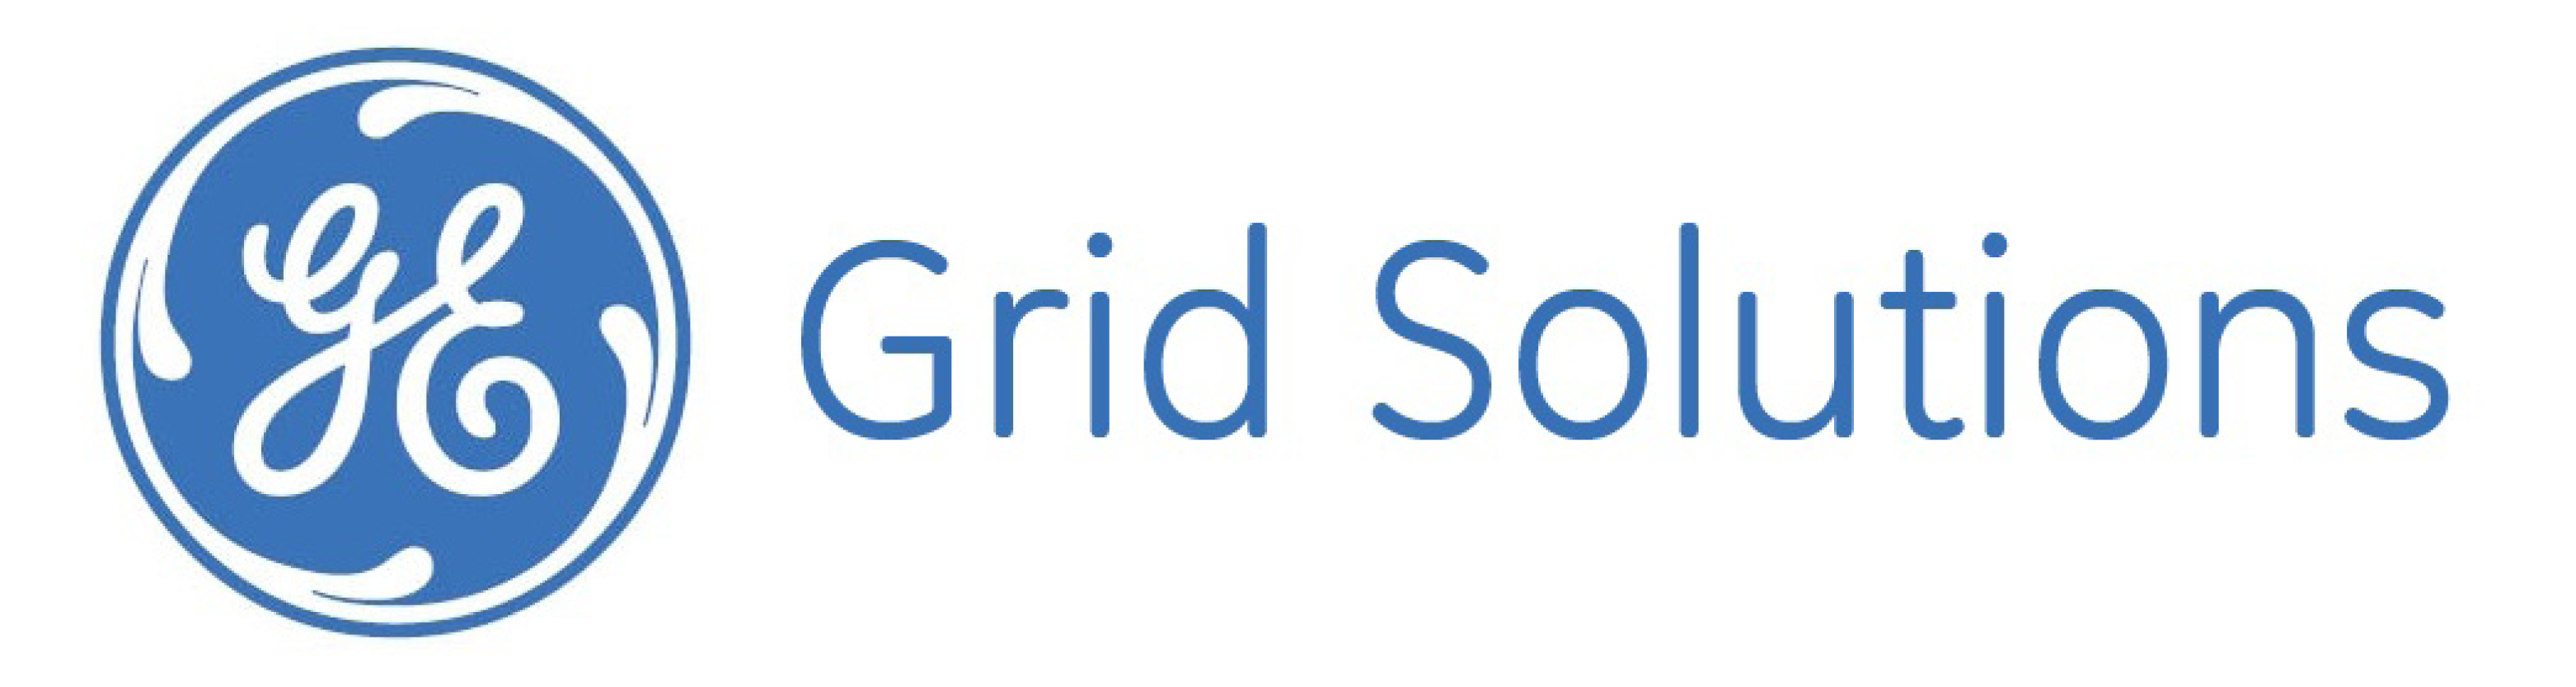 GE GS supply partner logo